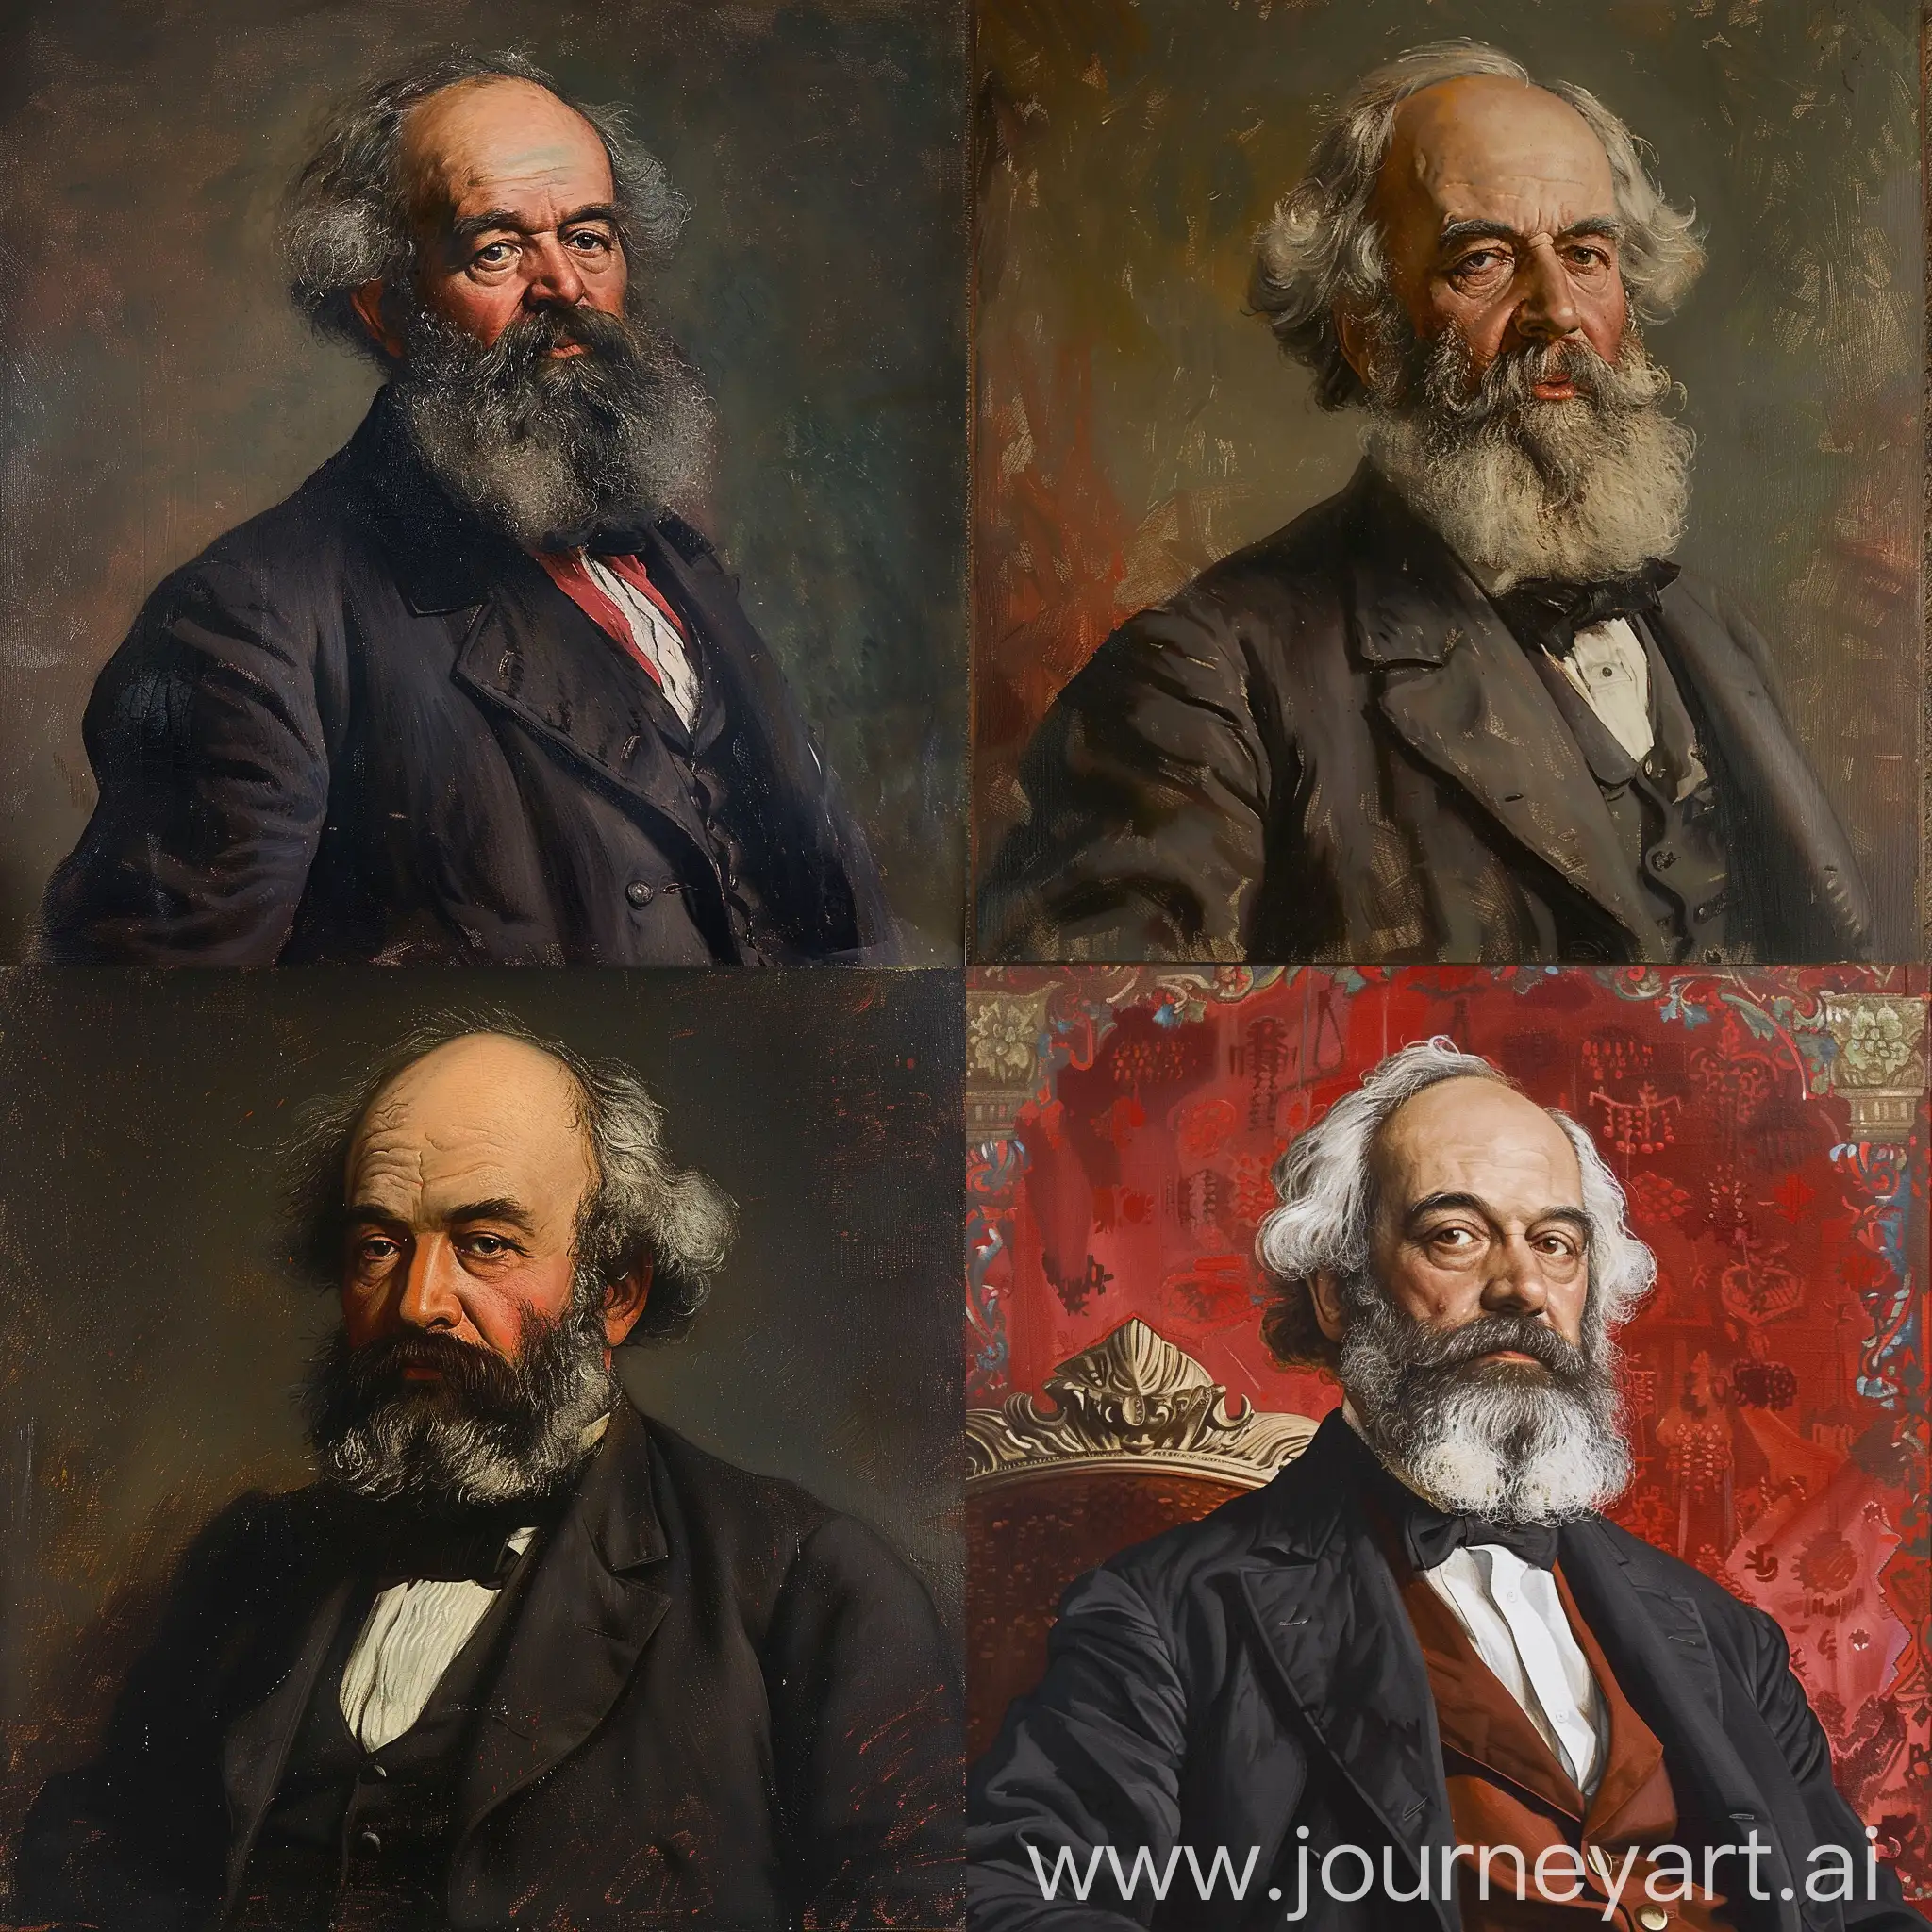 Karl-Marx-Portrait-Revolutionary-Socialist-Leader-in-Monochrome-Style